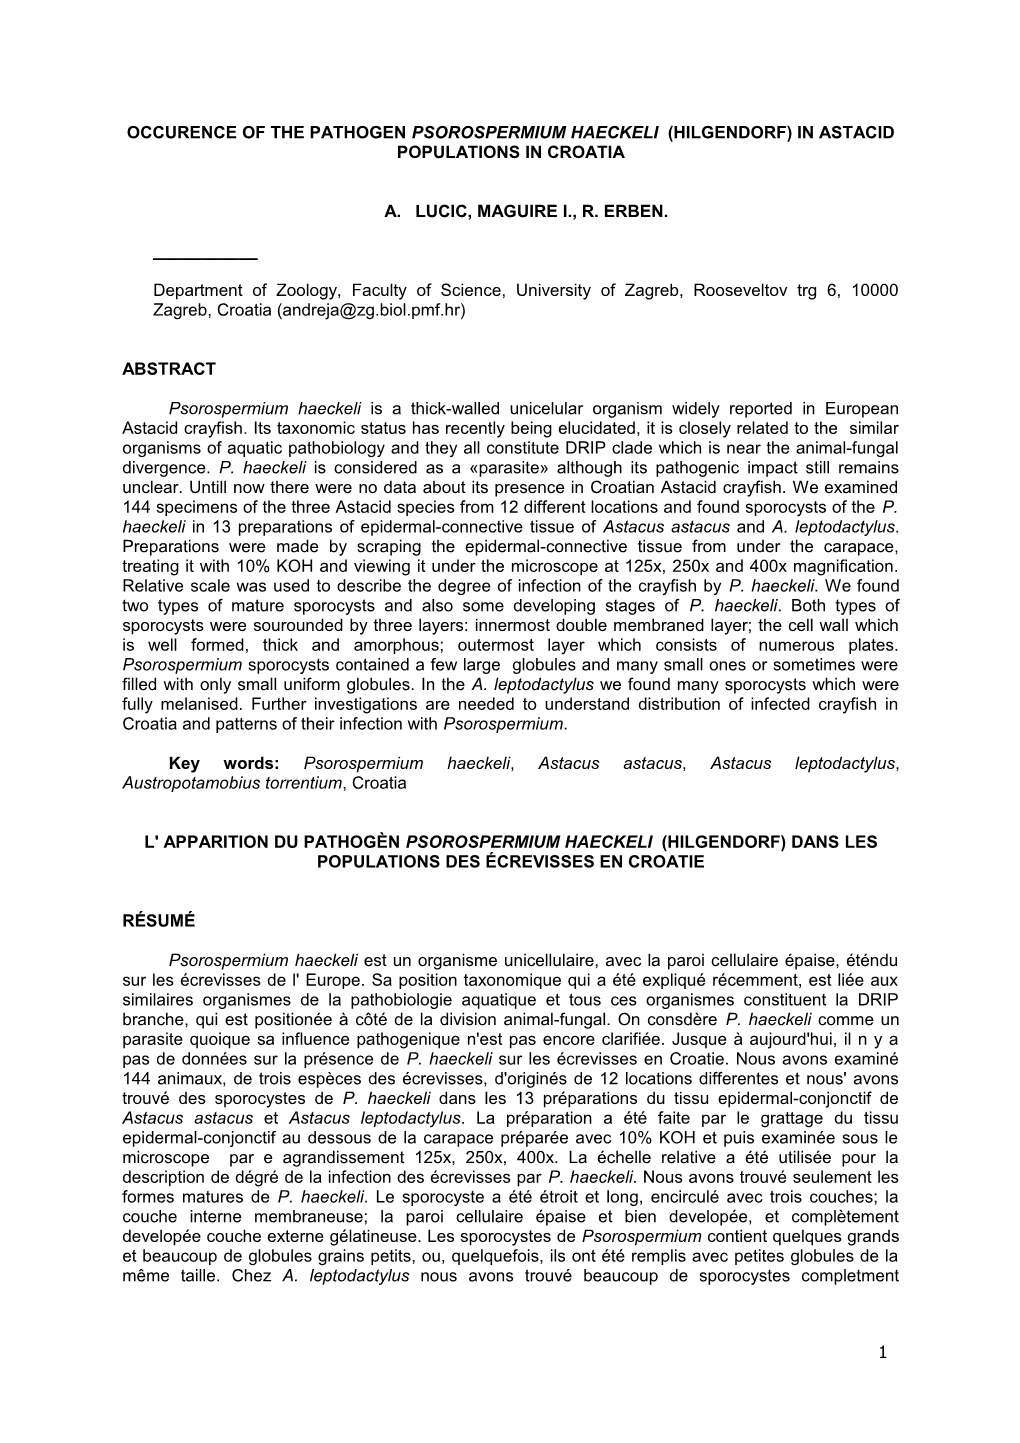 Occurence of the Pathogen Psorospermium Haeckeli (Hilgendorf) in Astacid Populations in Croatia